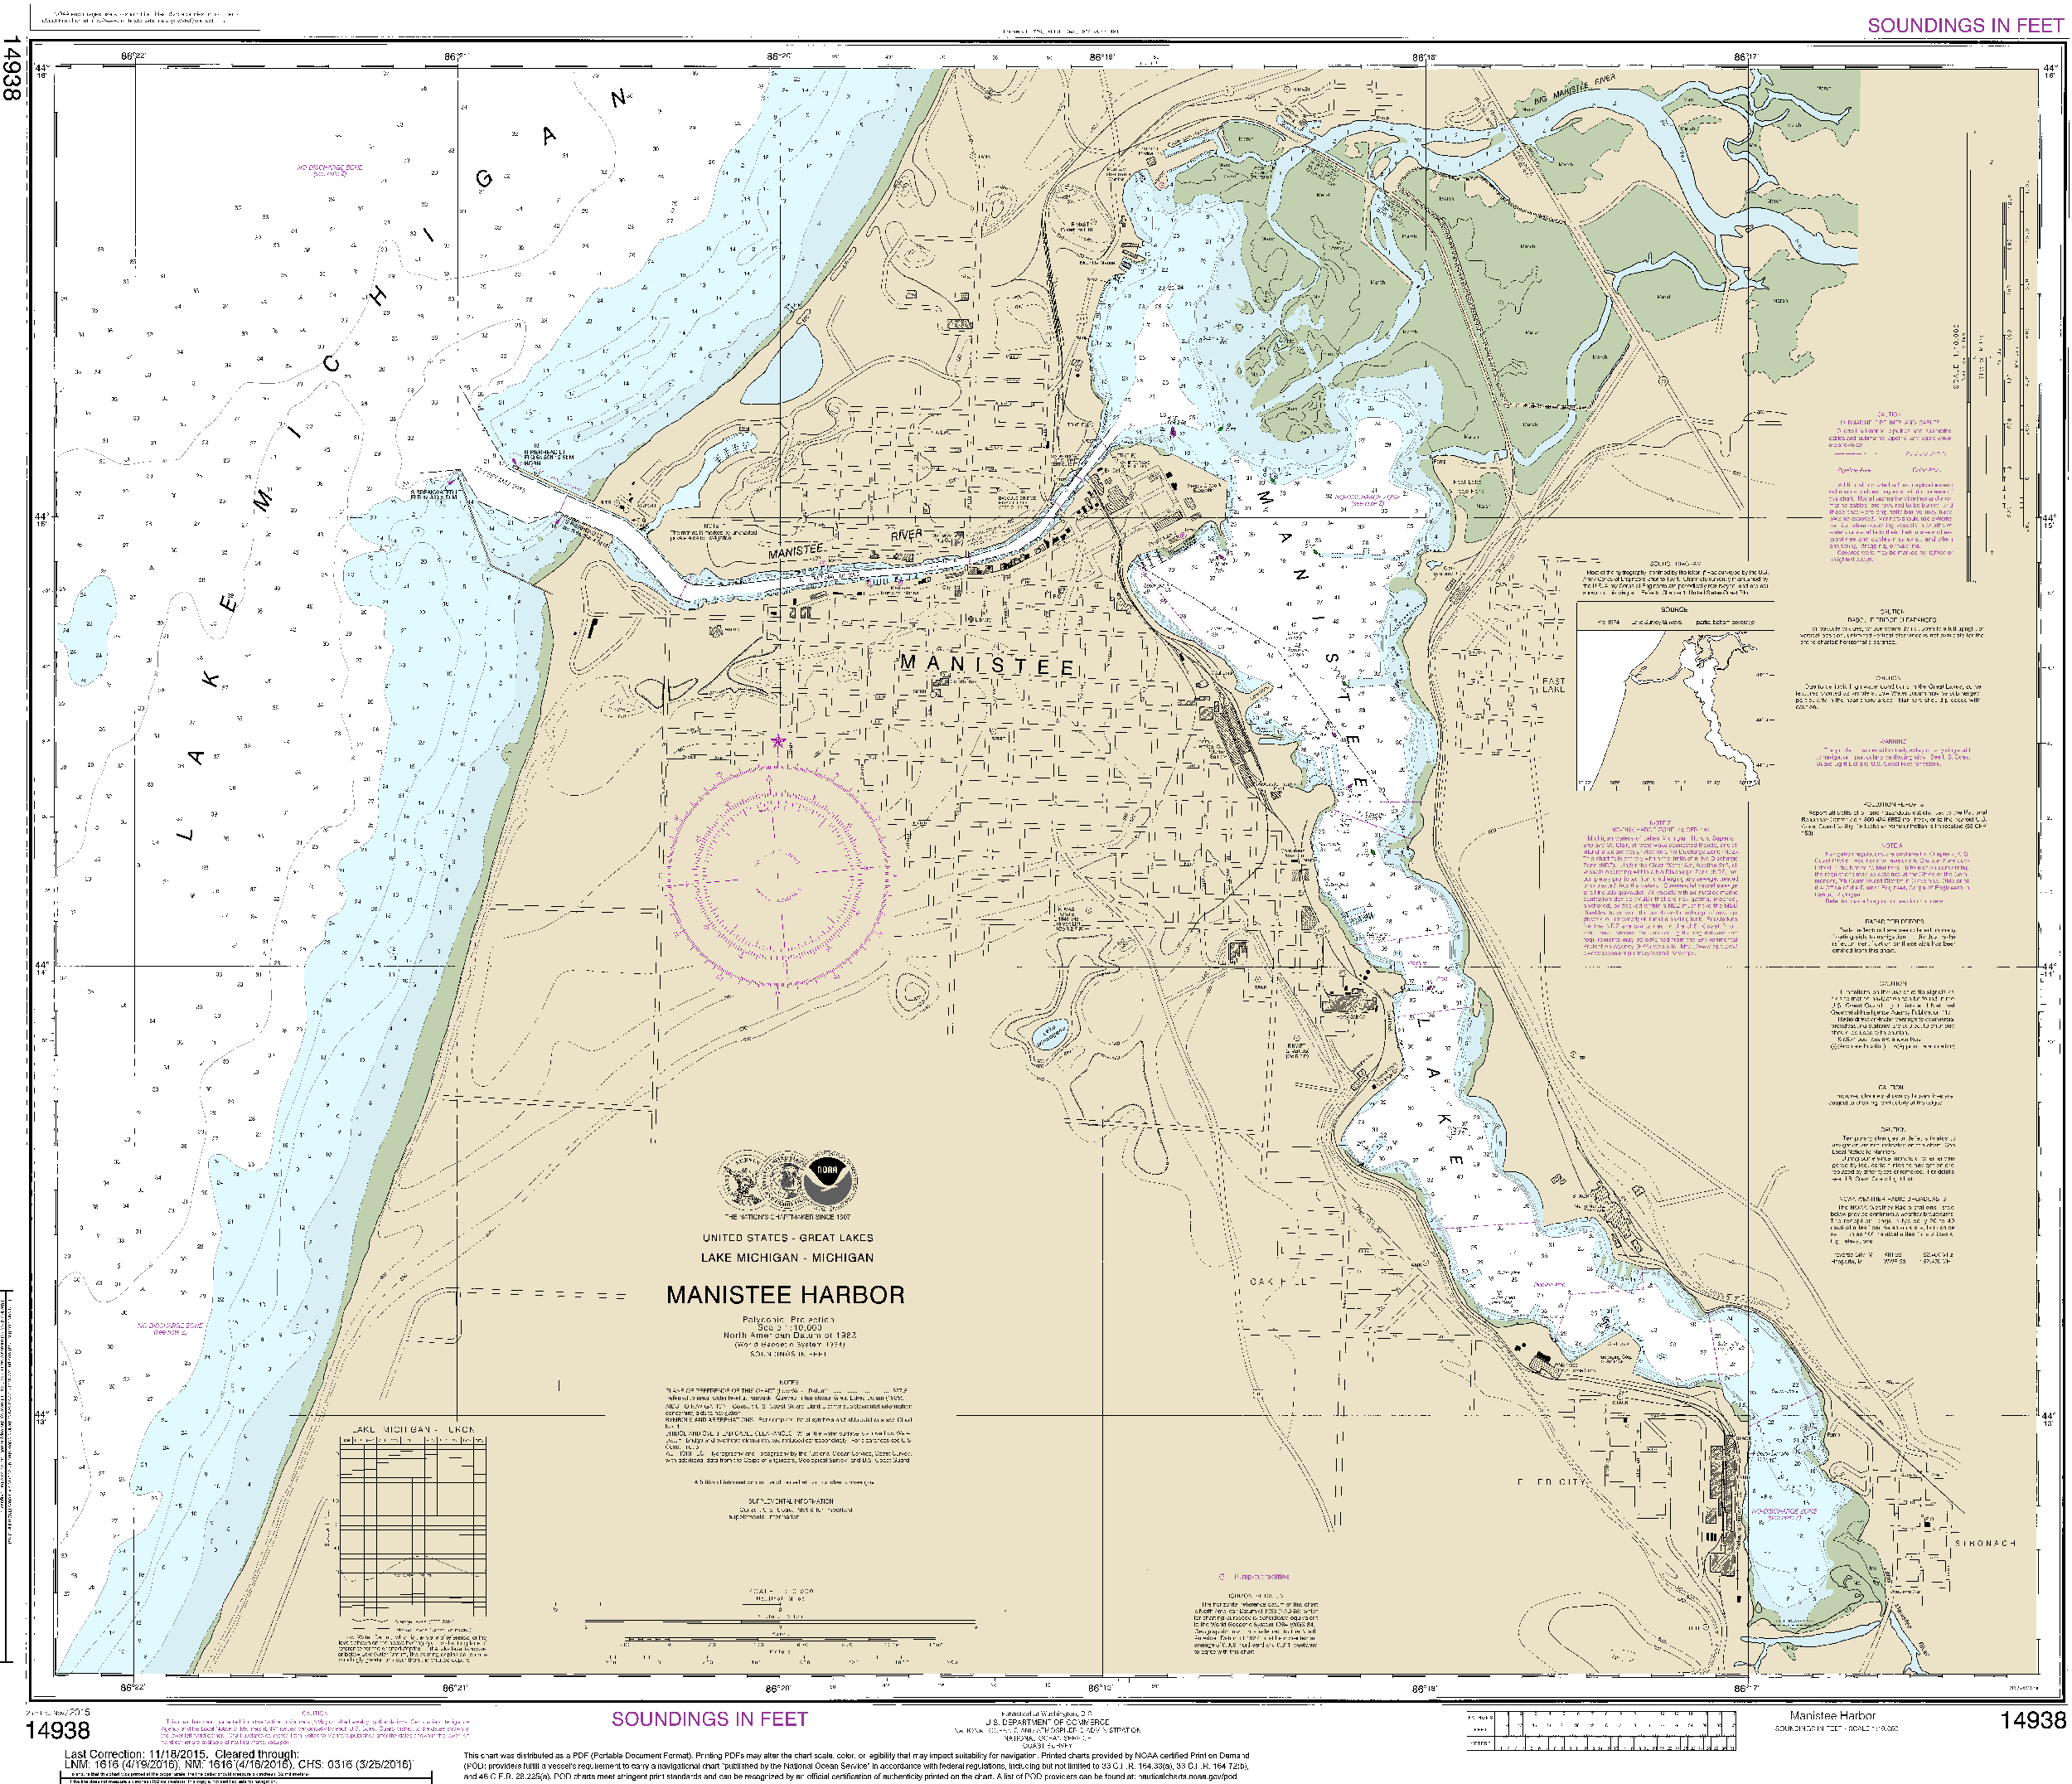 NOAA Nautical Chart 14938: Manistee Harbor and Manistee Lake